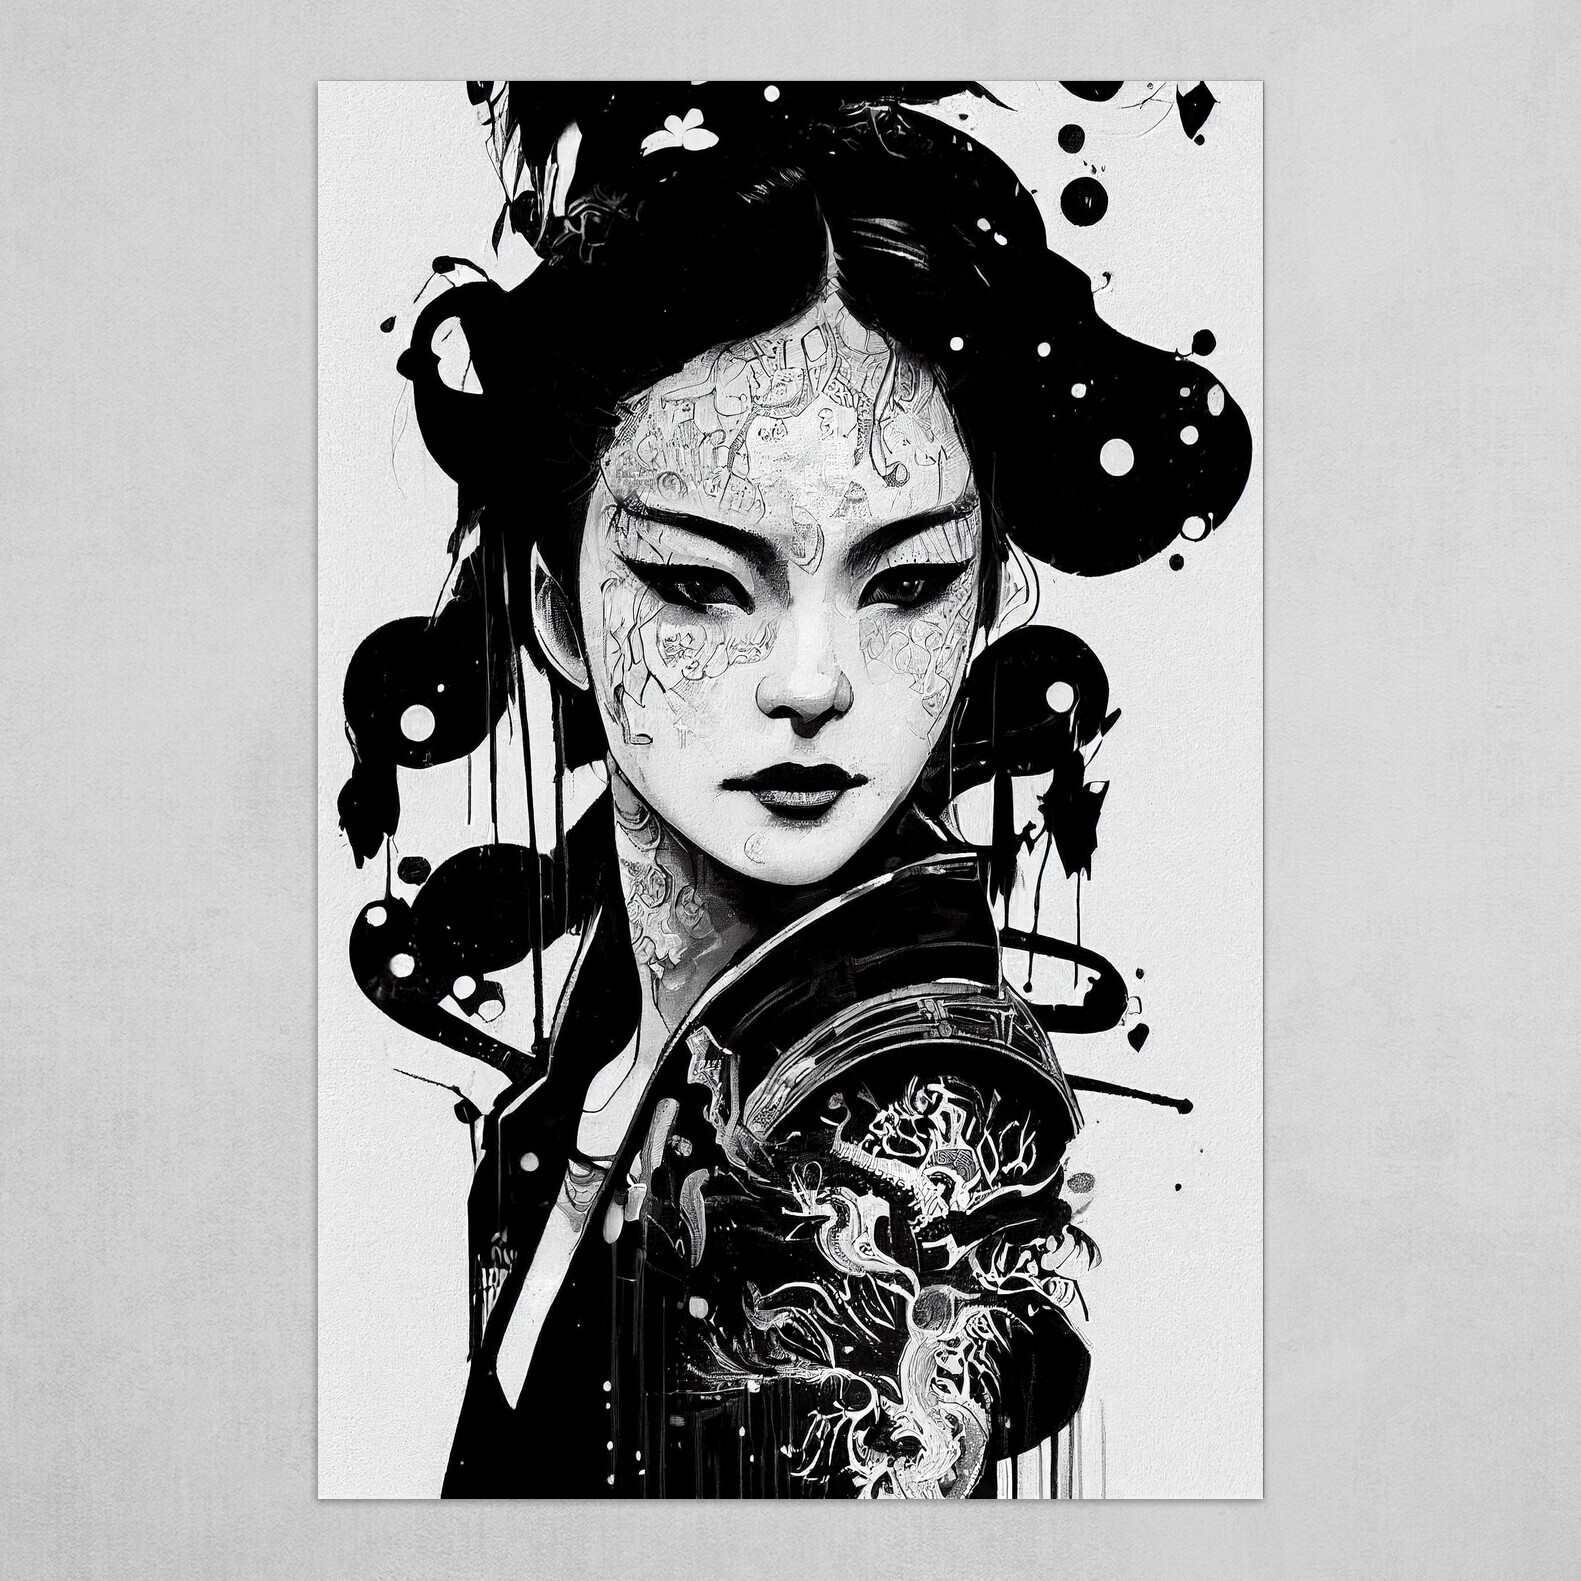 ArtStation - Japanese Geisha Downloadable Print, Stunning Art Large ...